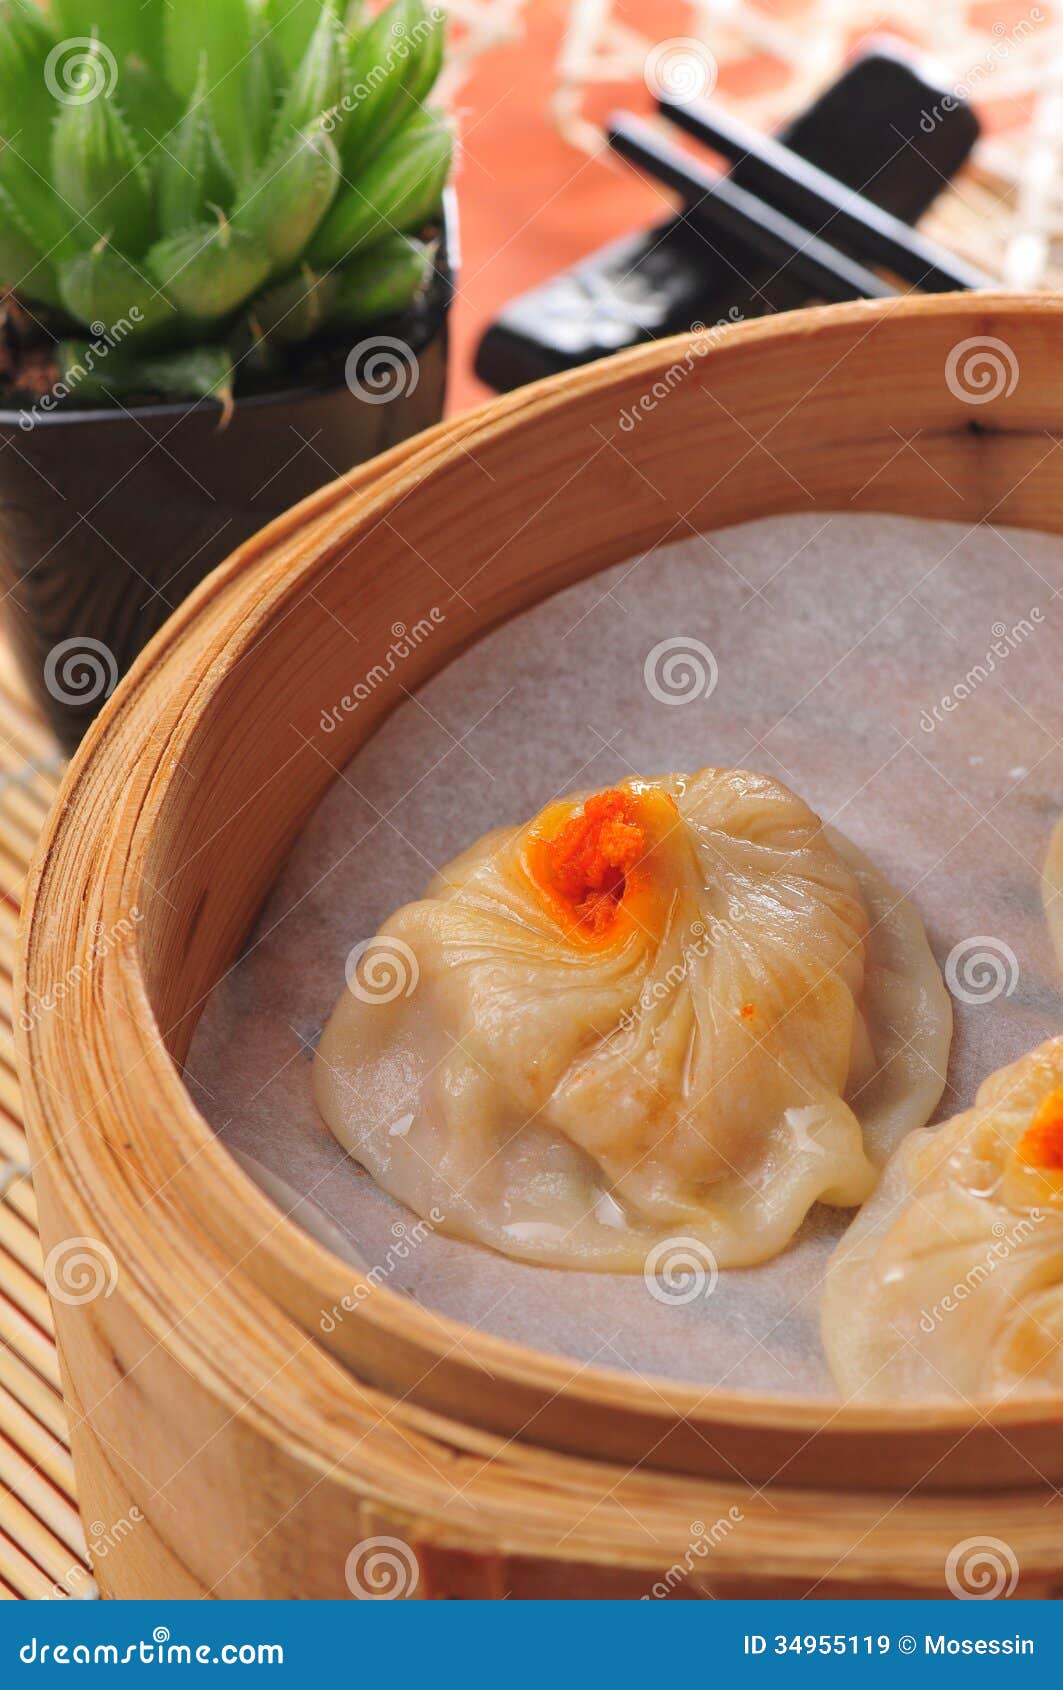 Soup pork dumpling stock image. Image of food, chinese - 34955119